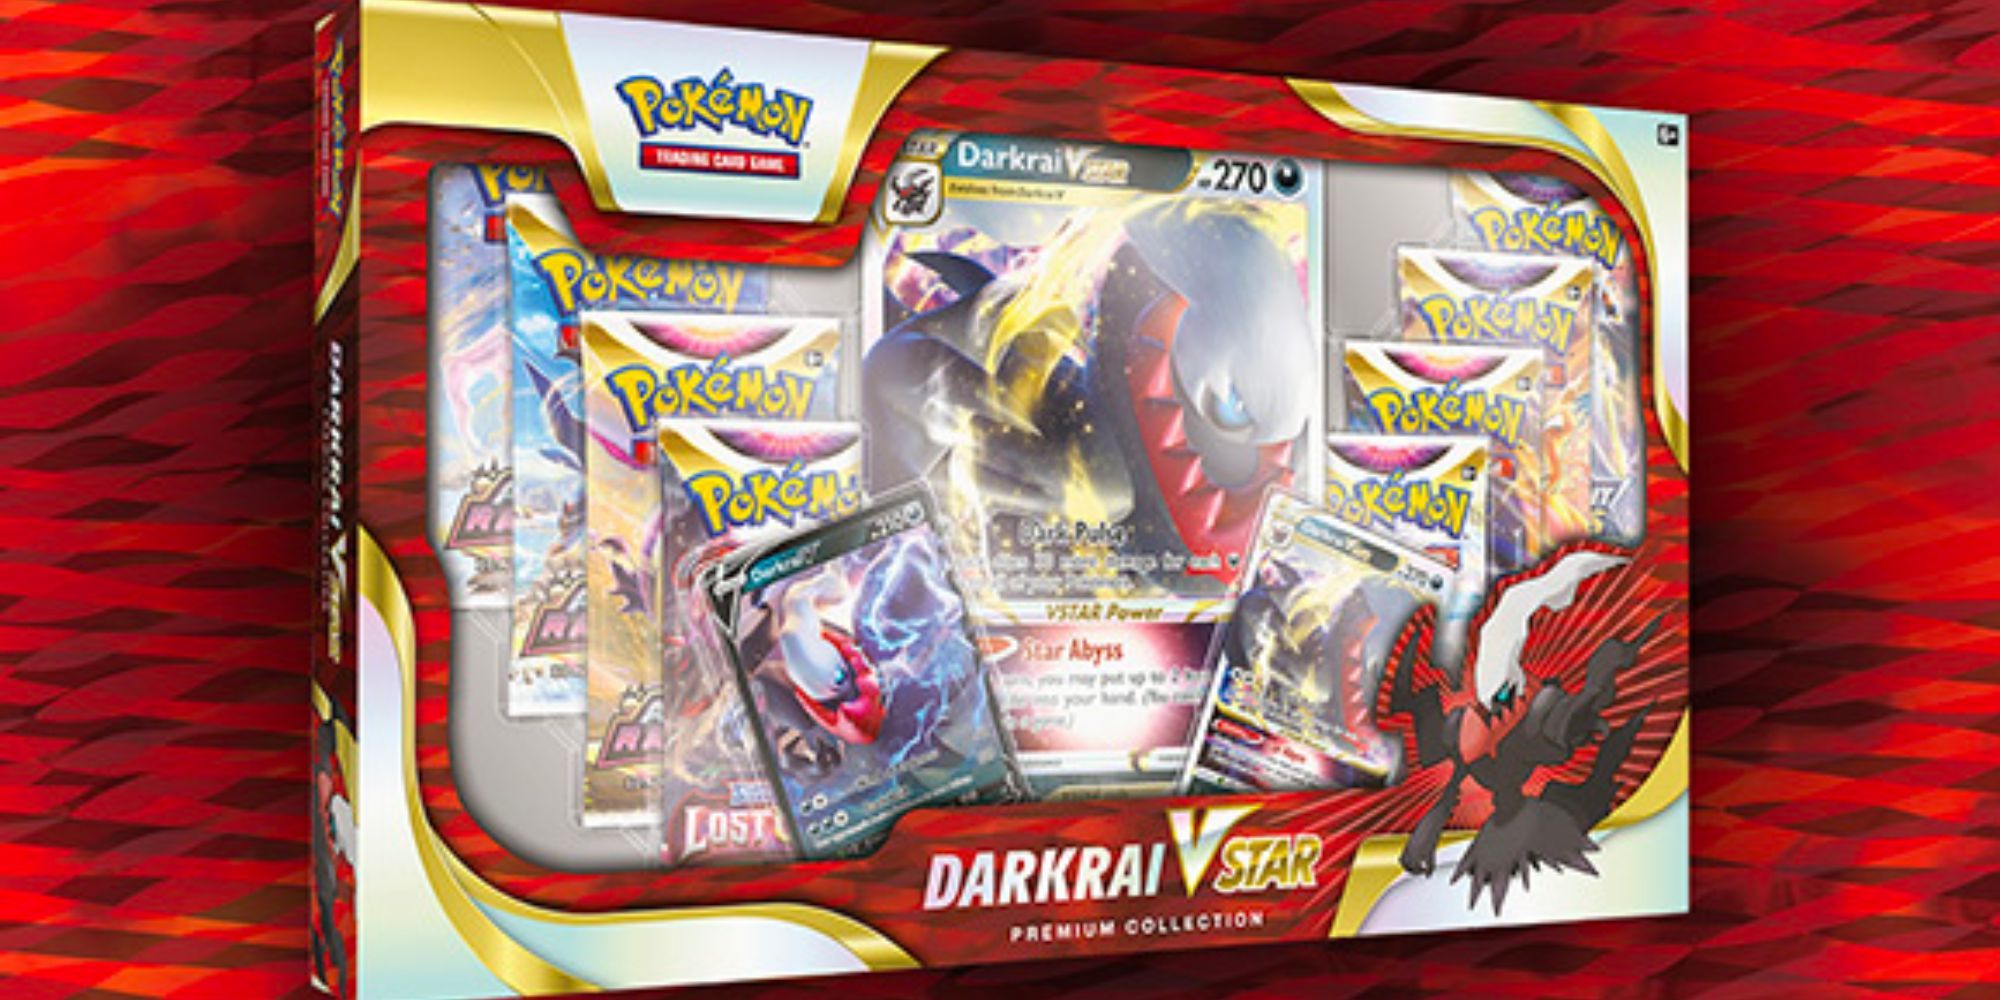 Darkrai VSTAR Premium Collection in the Pokemon TCG